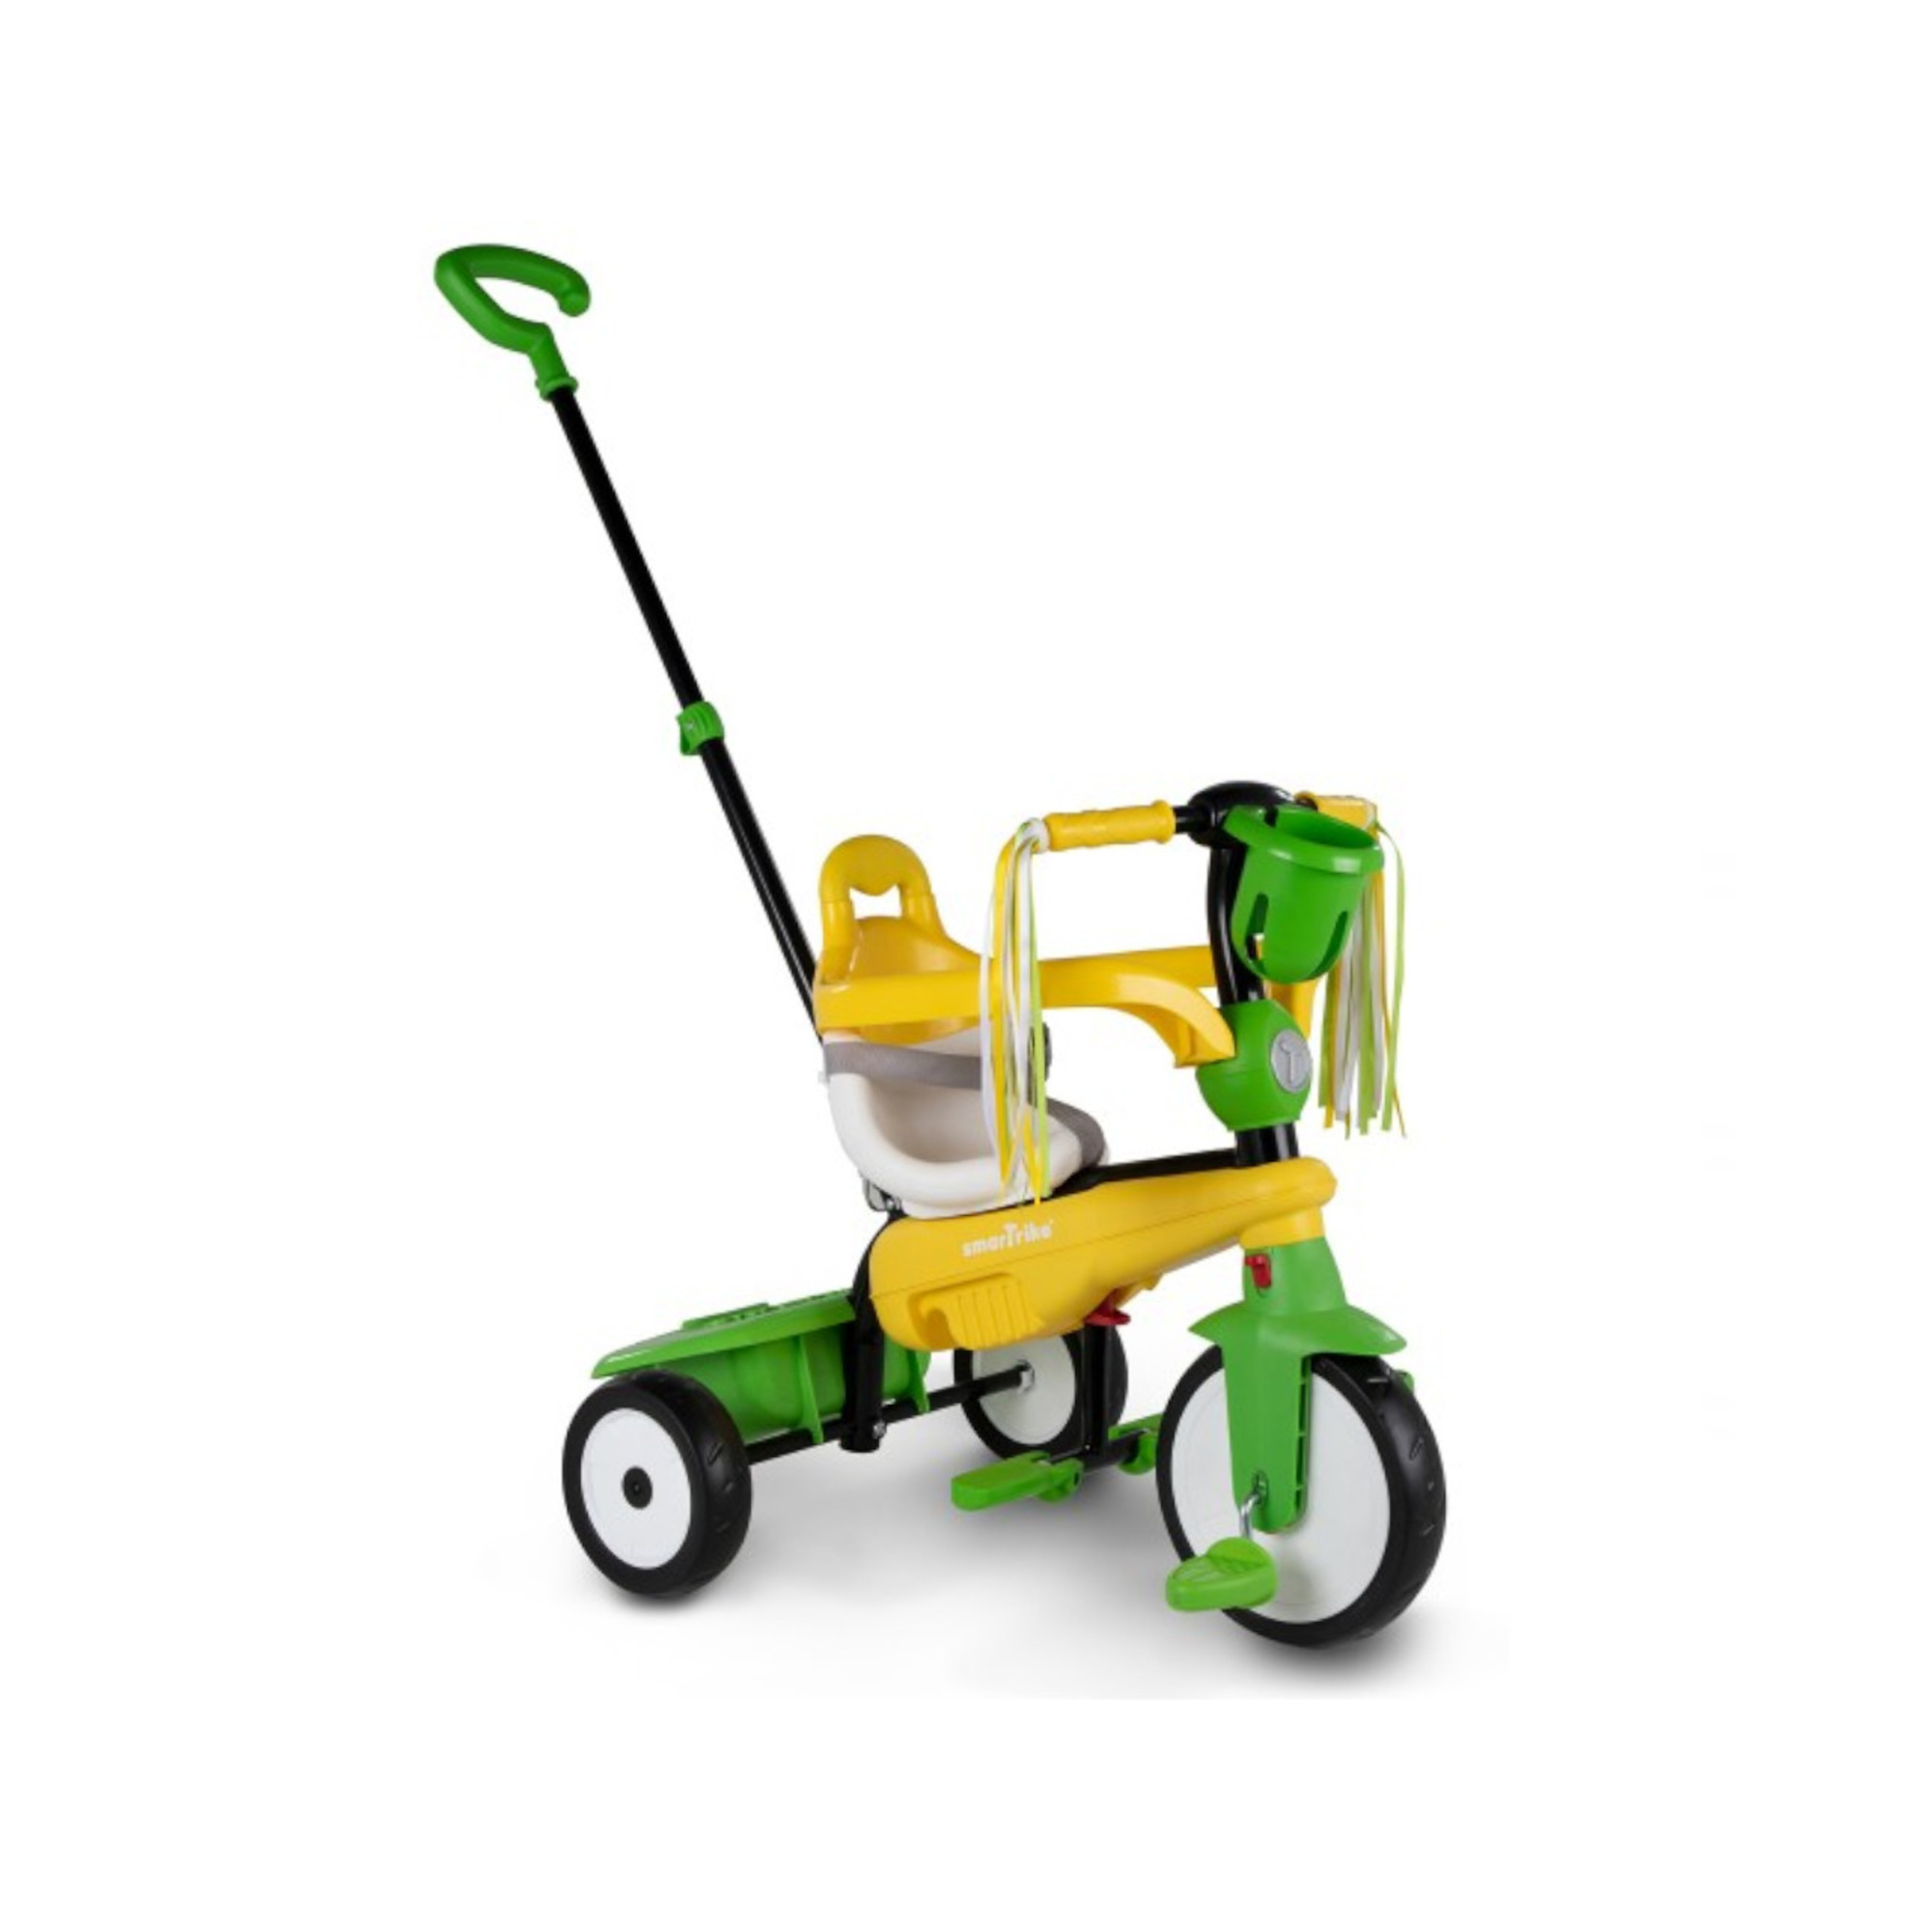 Triciclo breeze 3 in 1 - 15m+ - verde - smart trike - Baby Smile Original